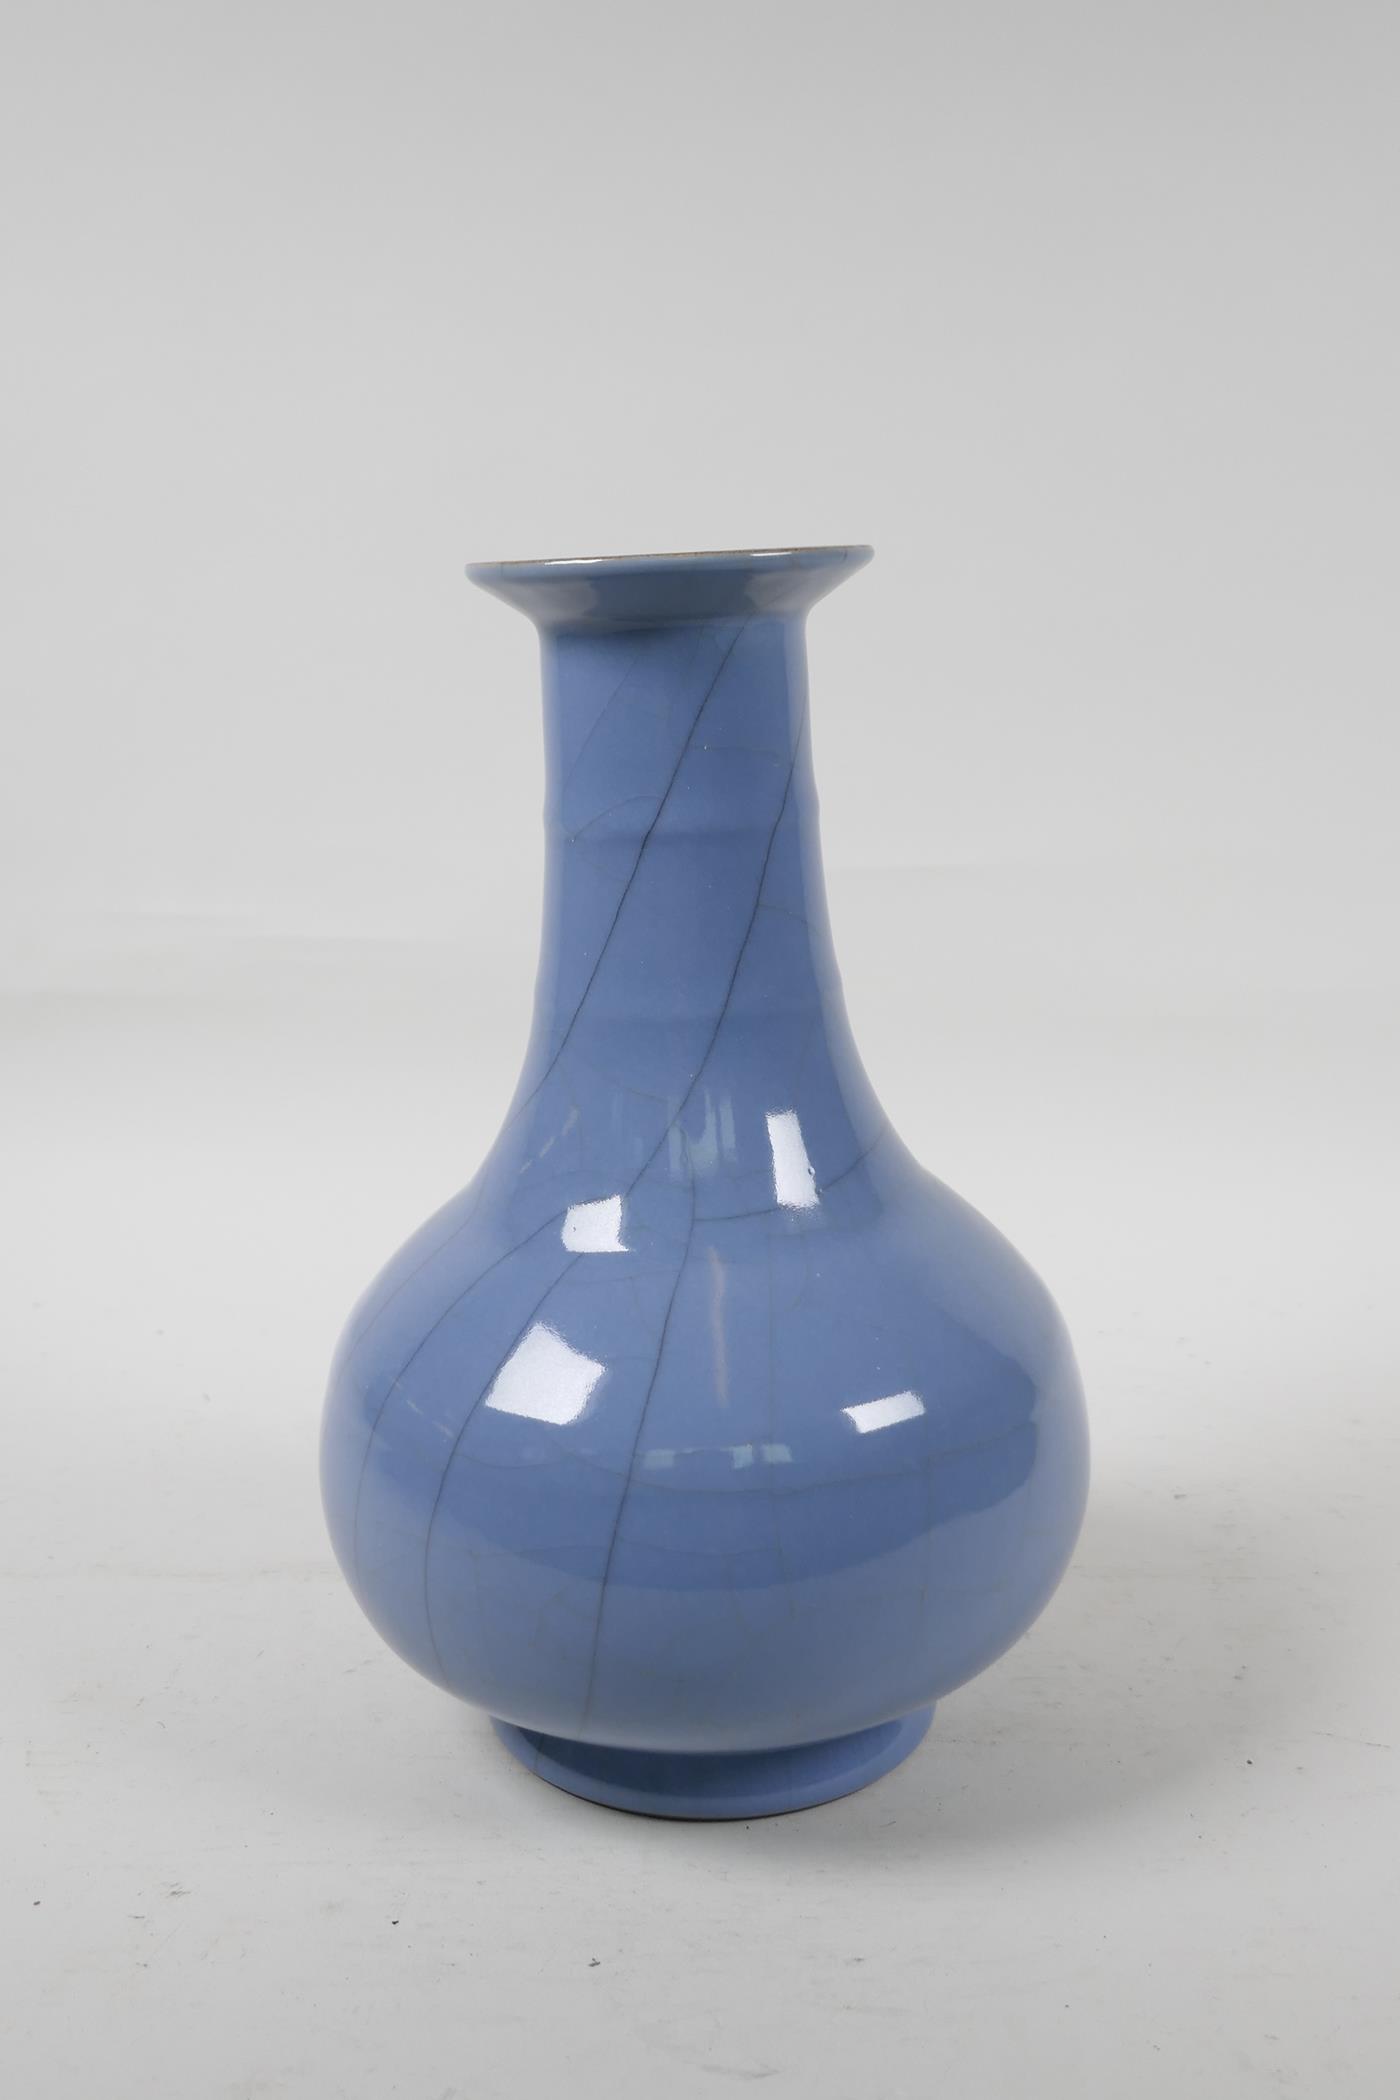 A Chinese blue crackleglaze vase with ribbed neck, 9" high - Image 2 of 4